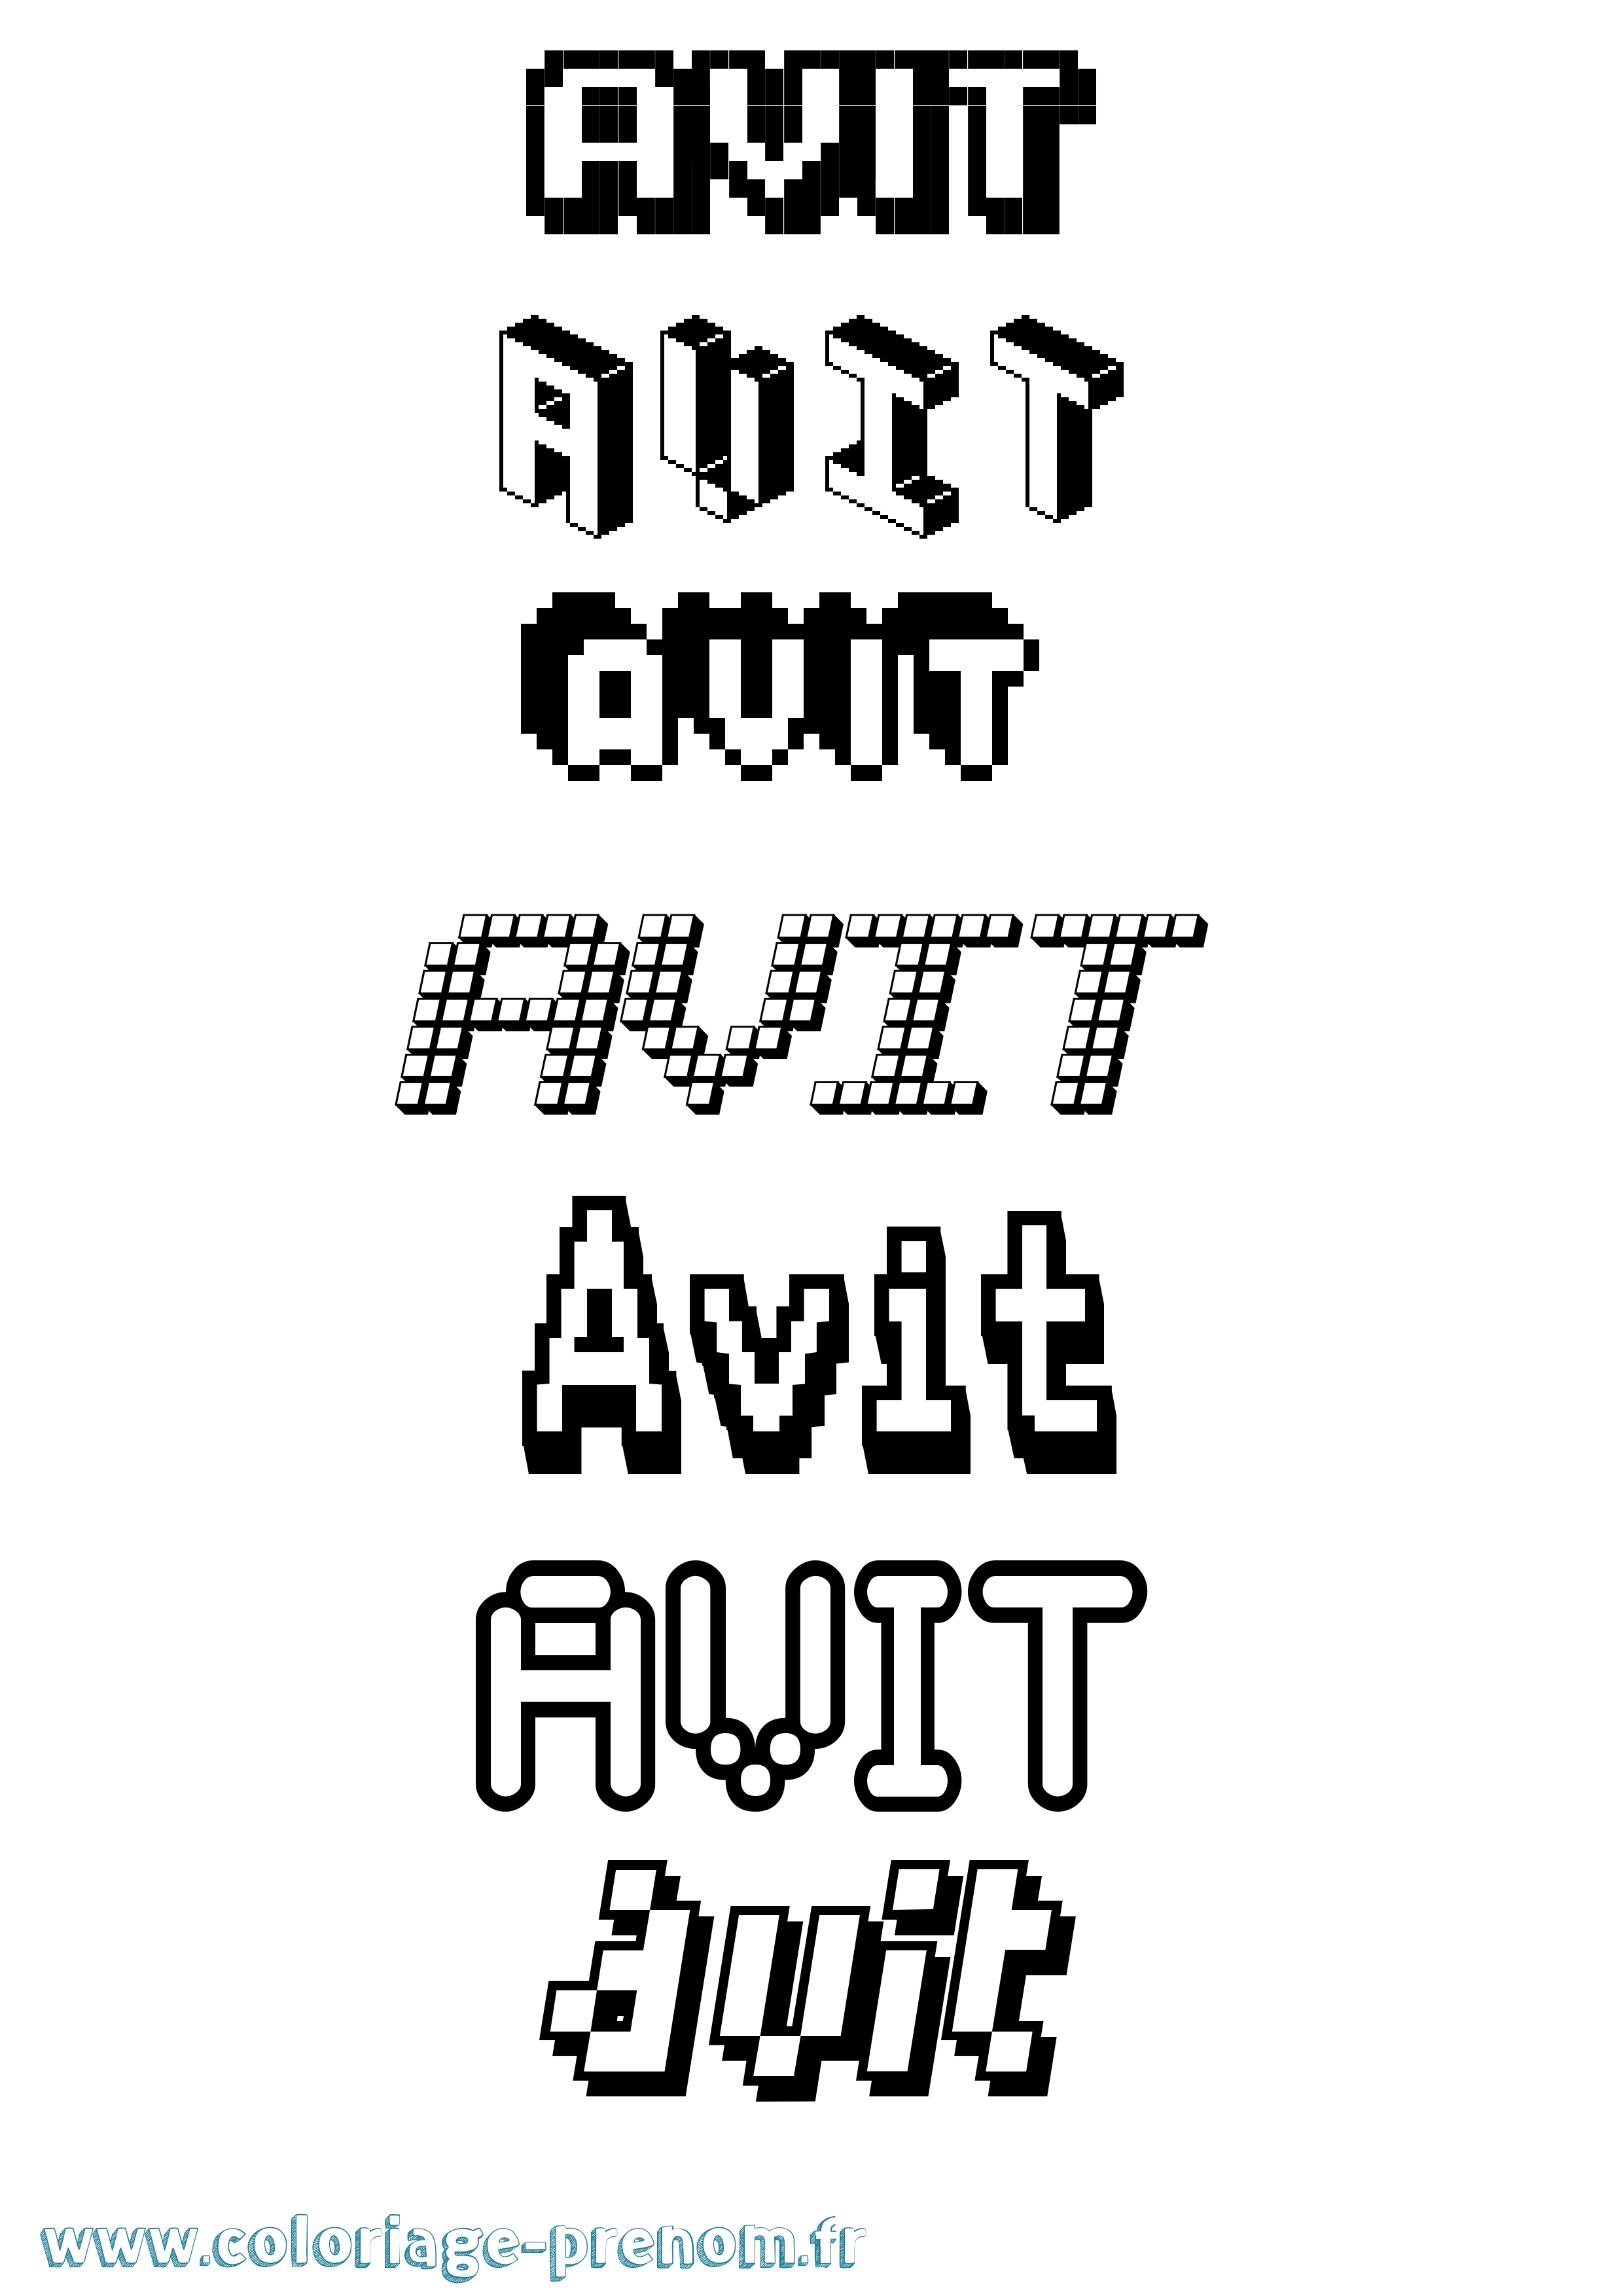 Coloriage prénom Avit Pixel